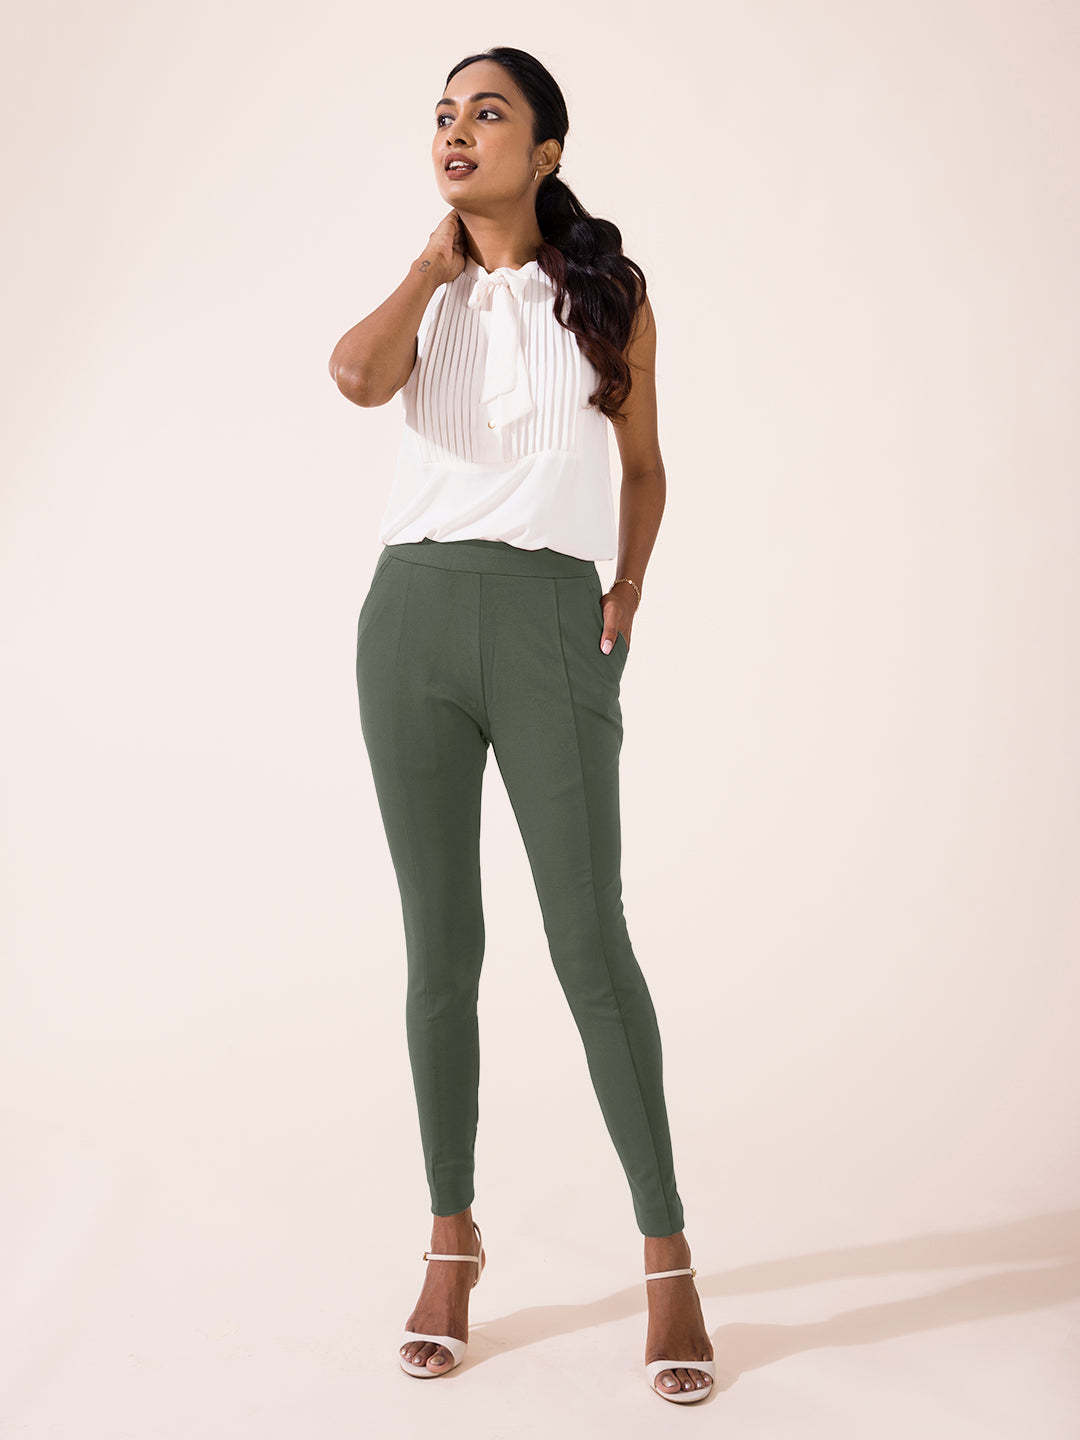 Olive Green V Cut Waist Cargo Wide Leg Pants – Hot Miami Styles